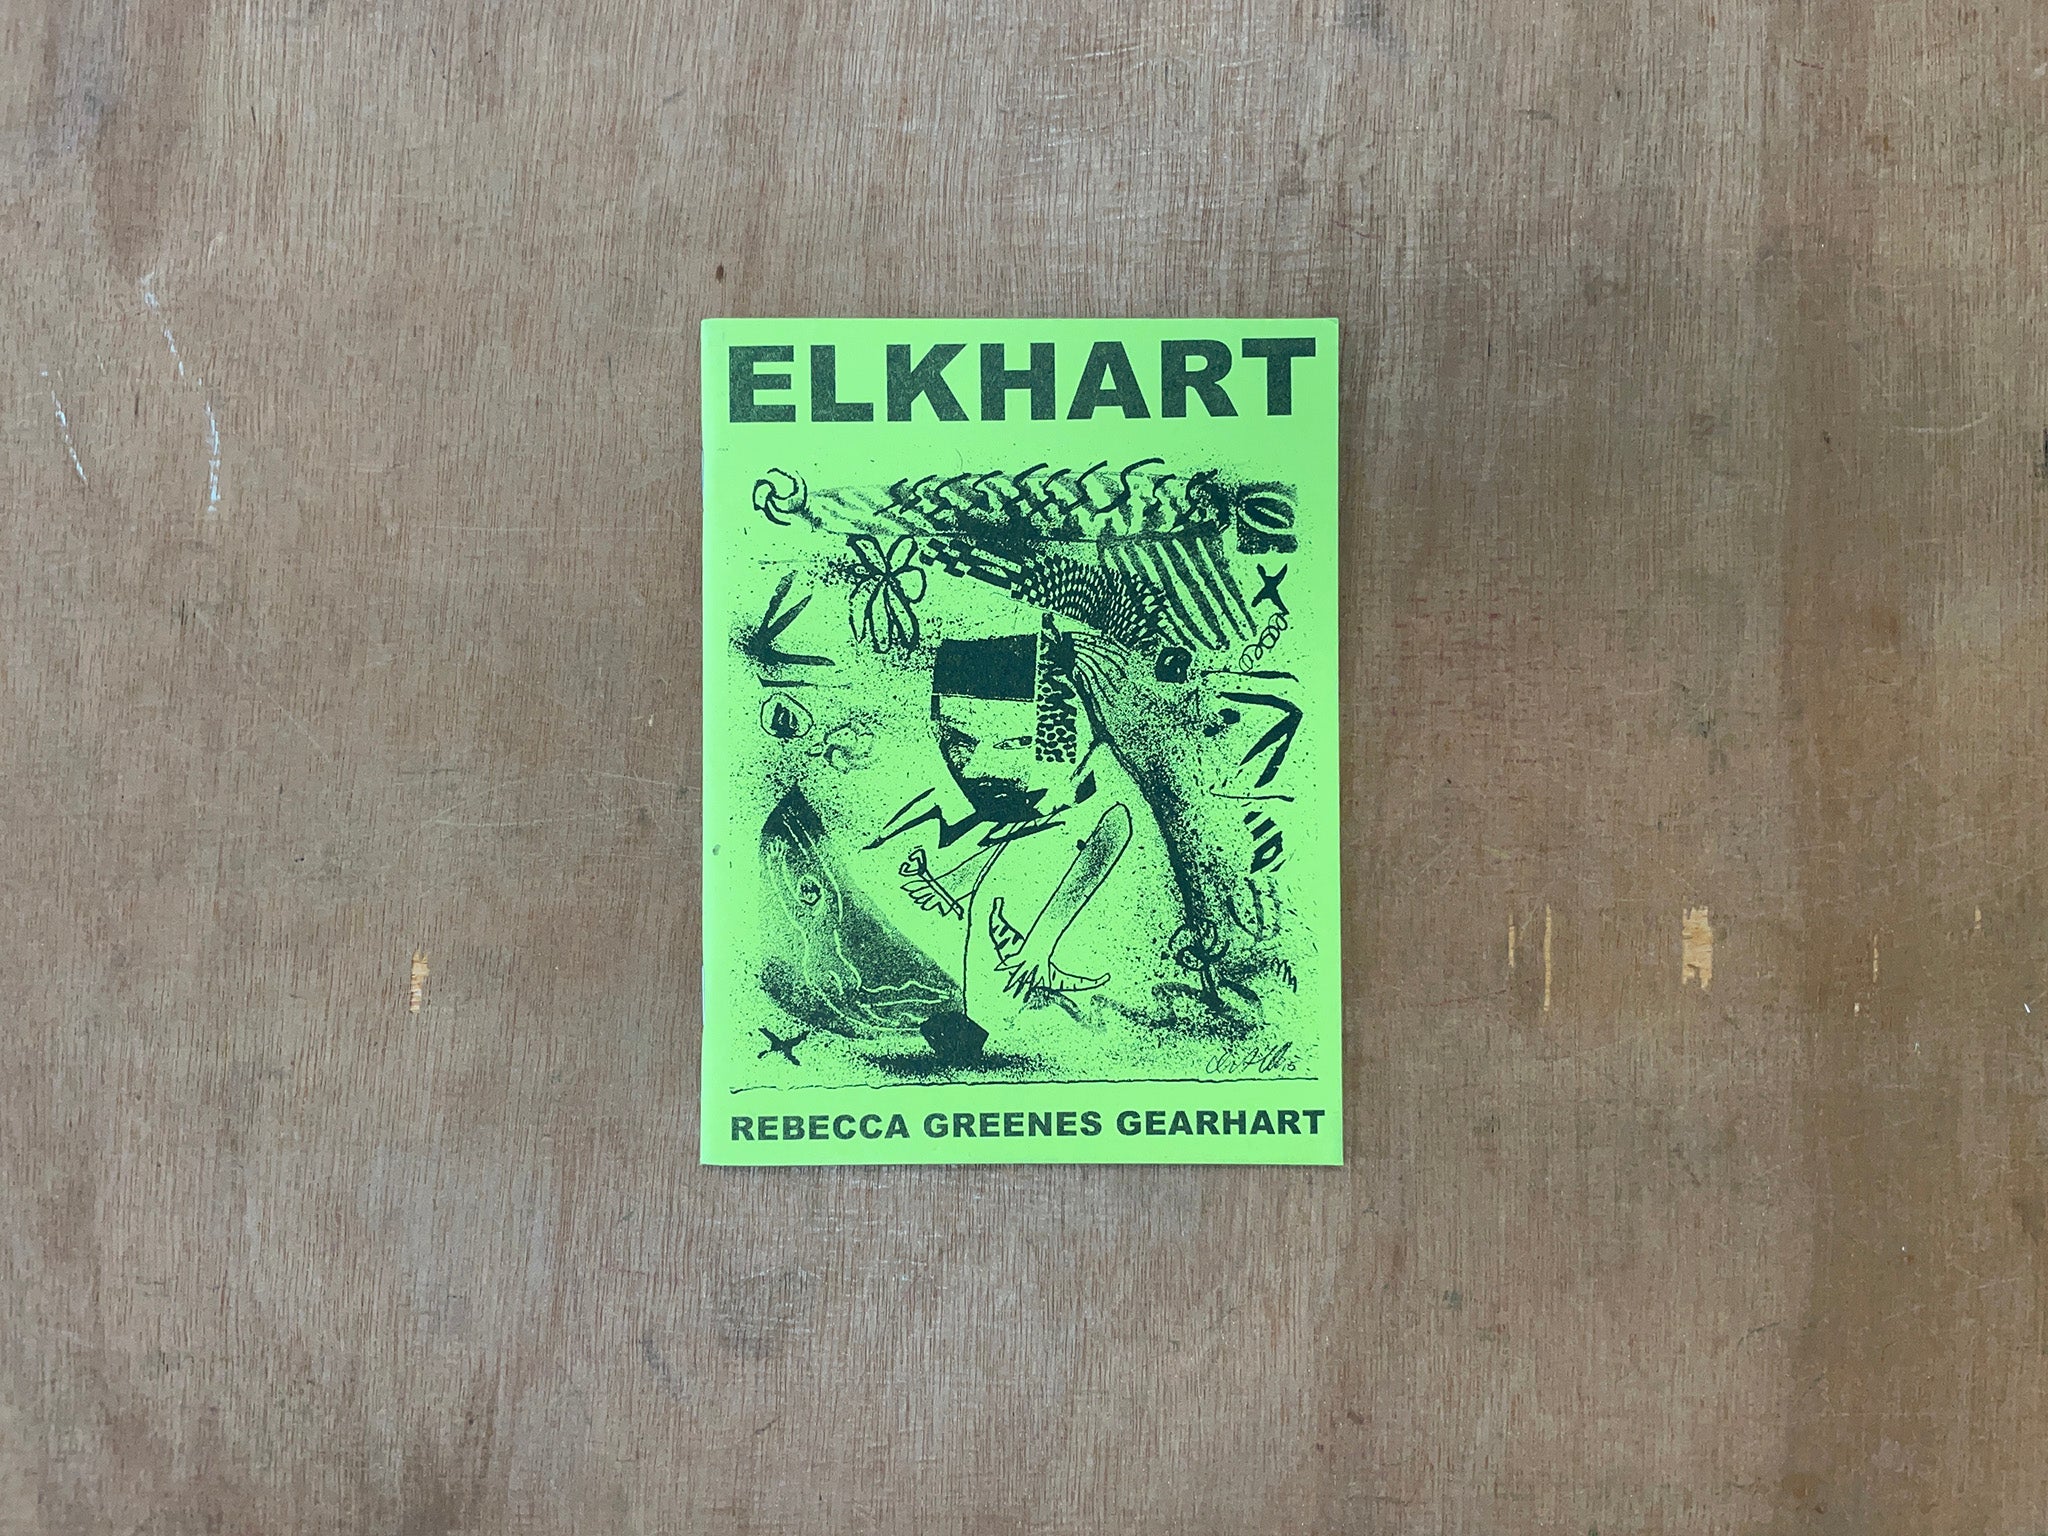 ELKHART by Rebecca Greenes Gearhart